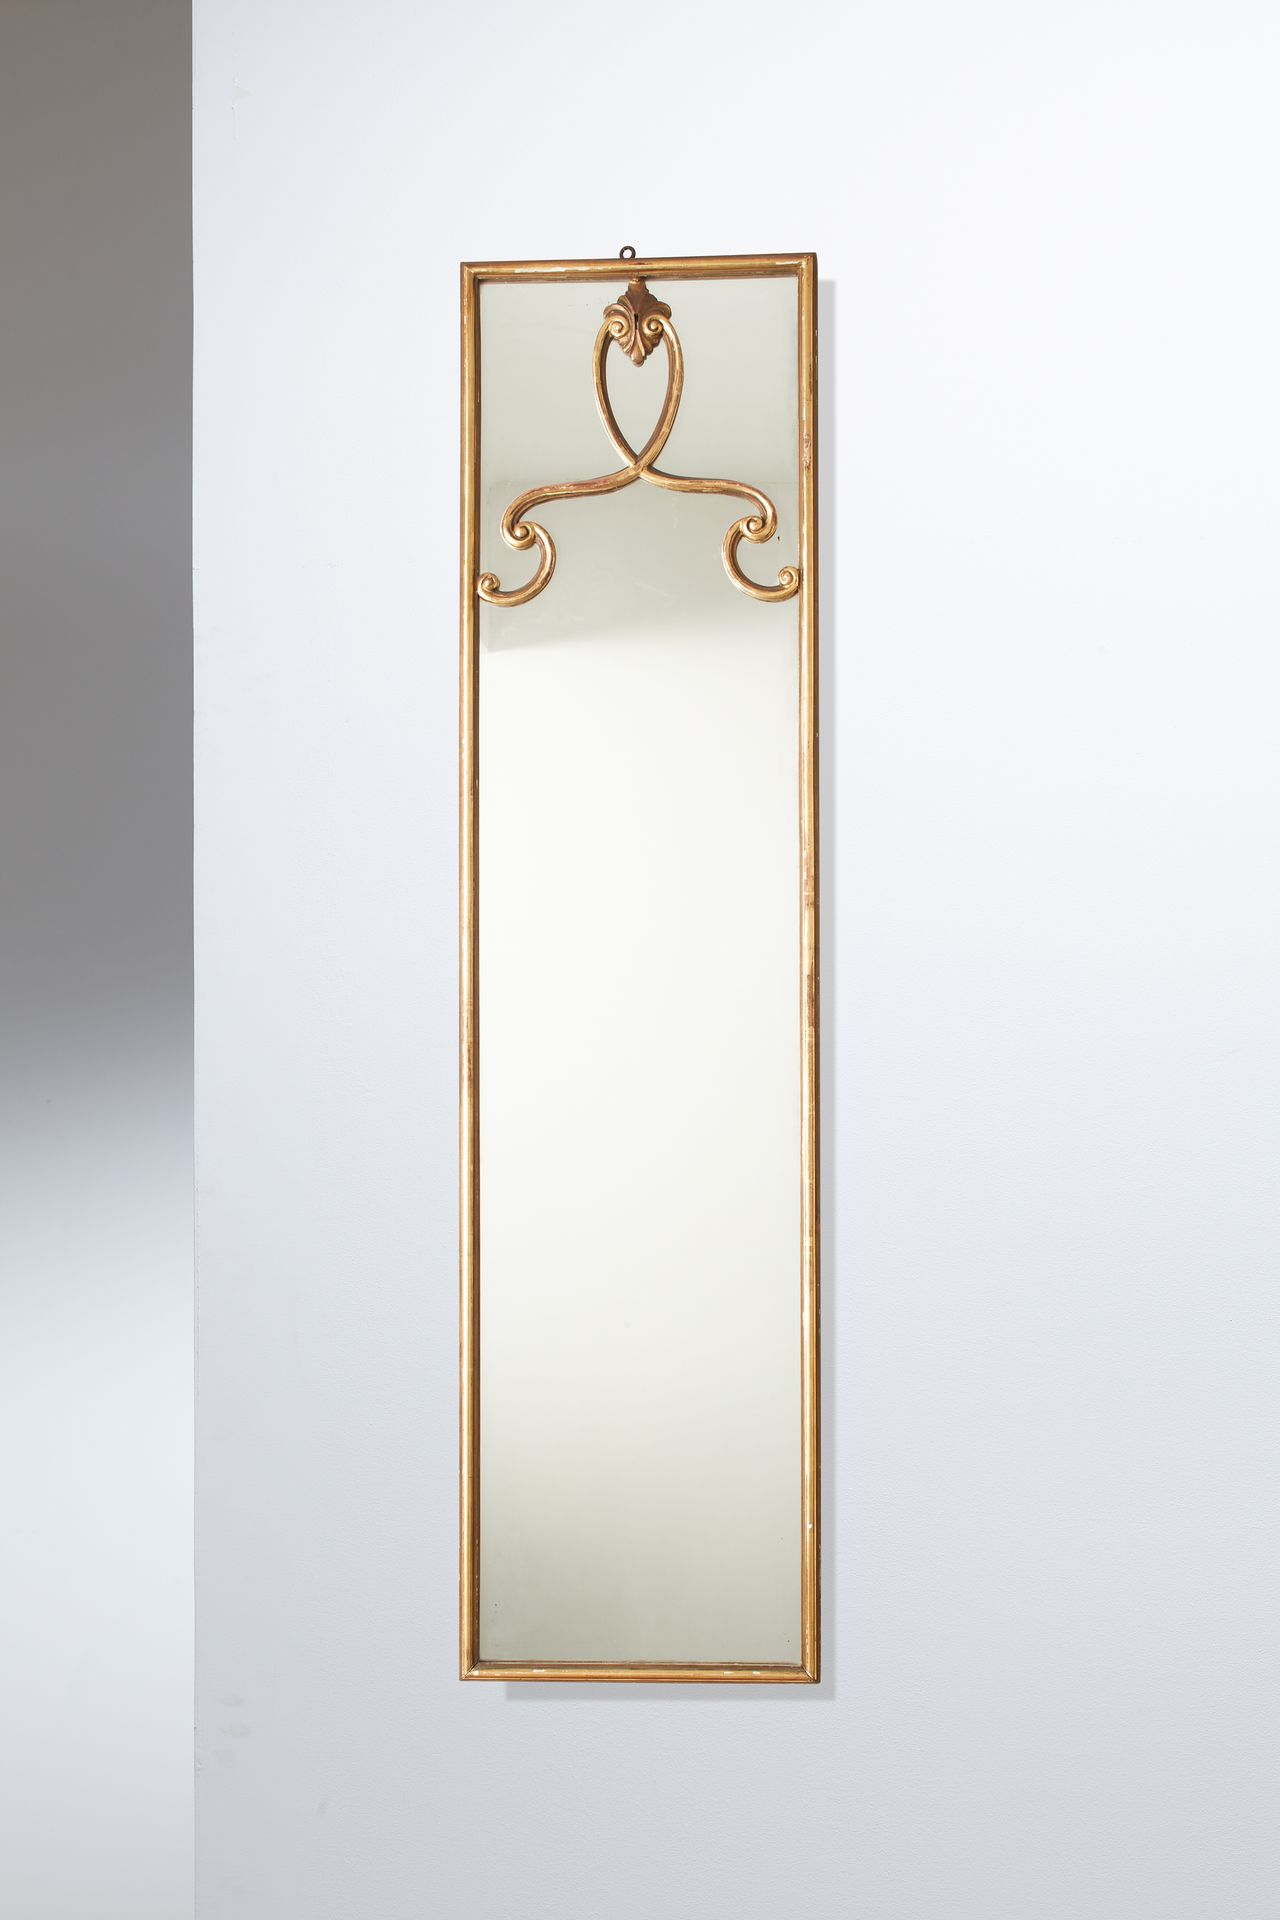 SCUOLA DI TORINO Neo-Baroque mirror. Carved wood, gilt wood. Italy 1950s. 
185x4&hellip;